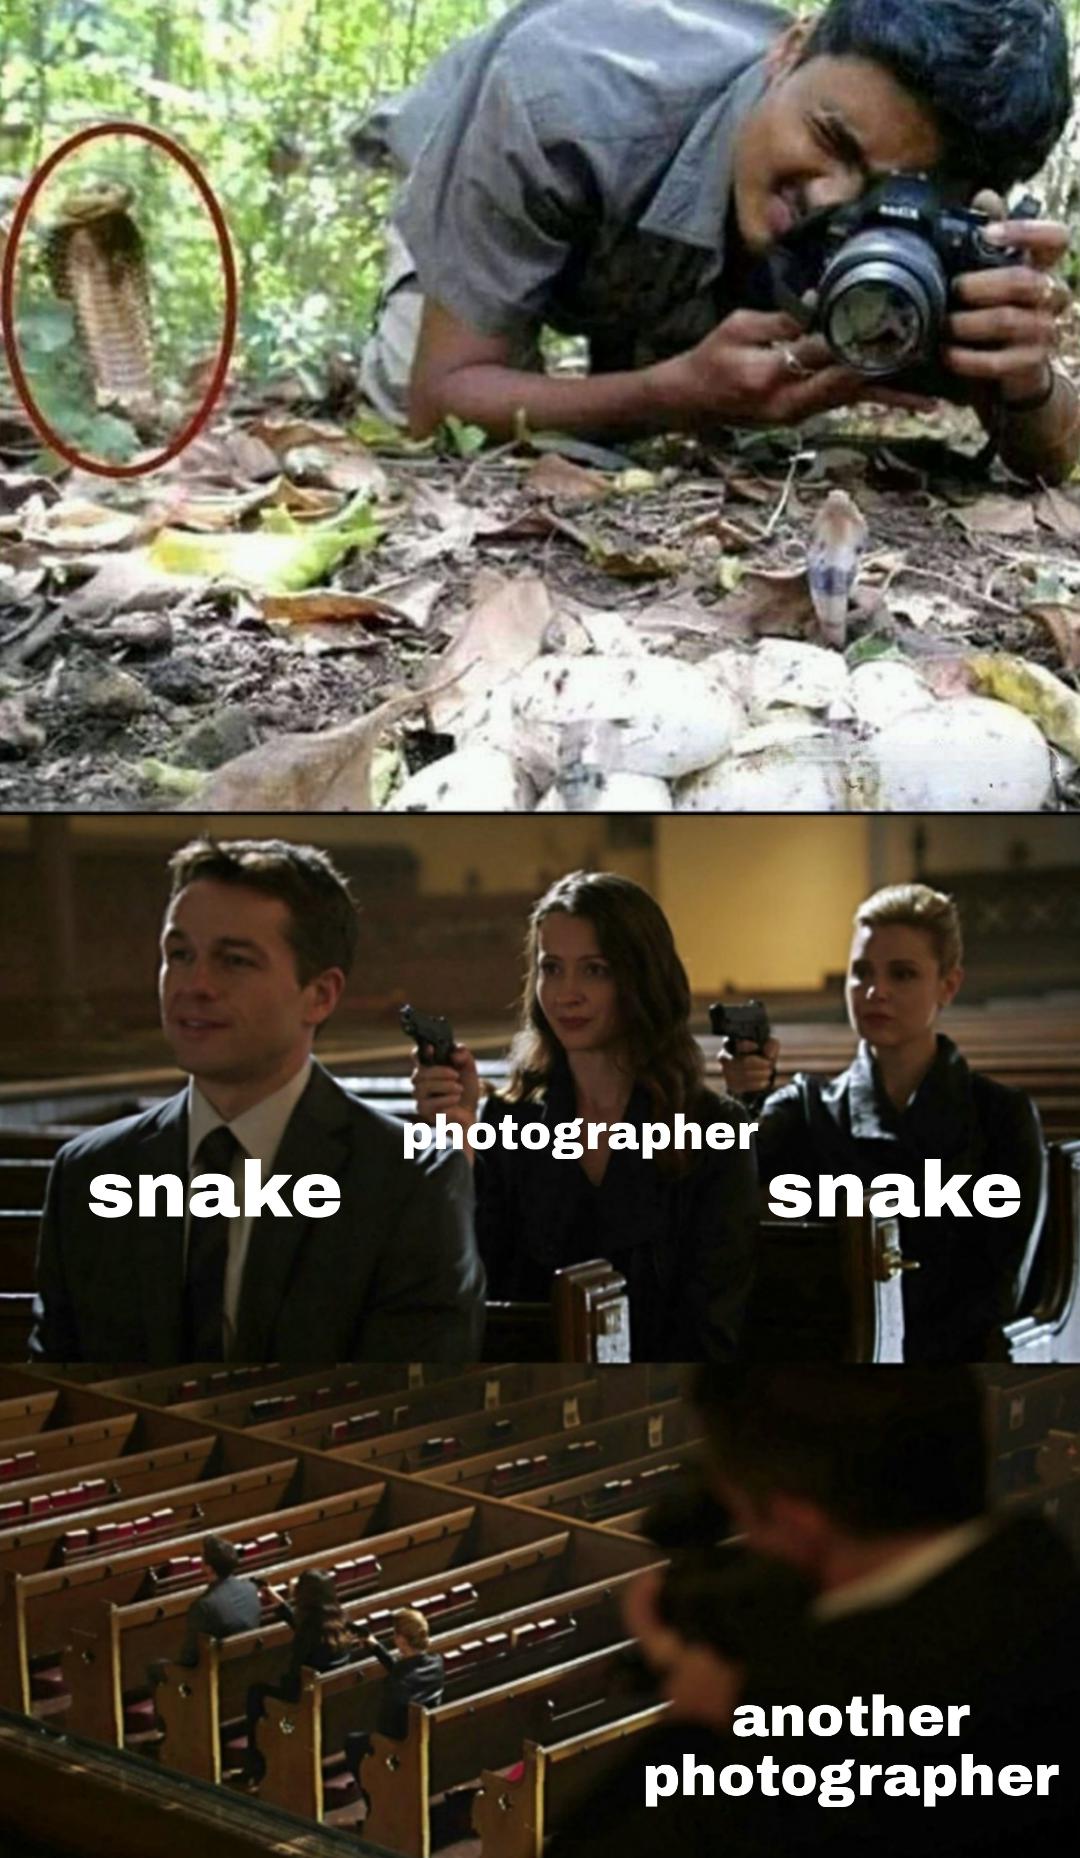 funny memes - dank memes - snake photographer snake another photographer